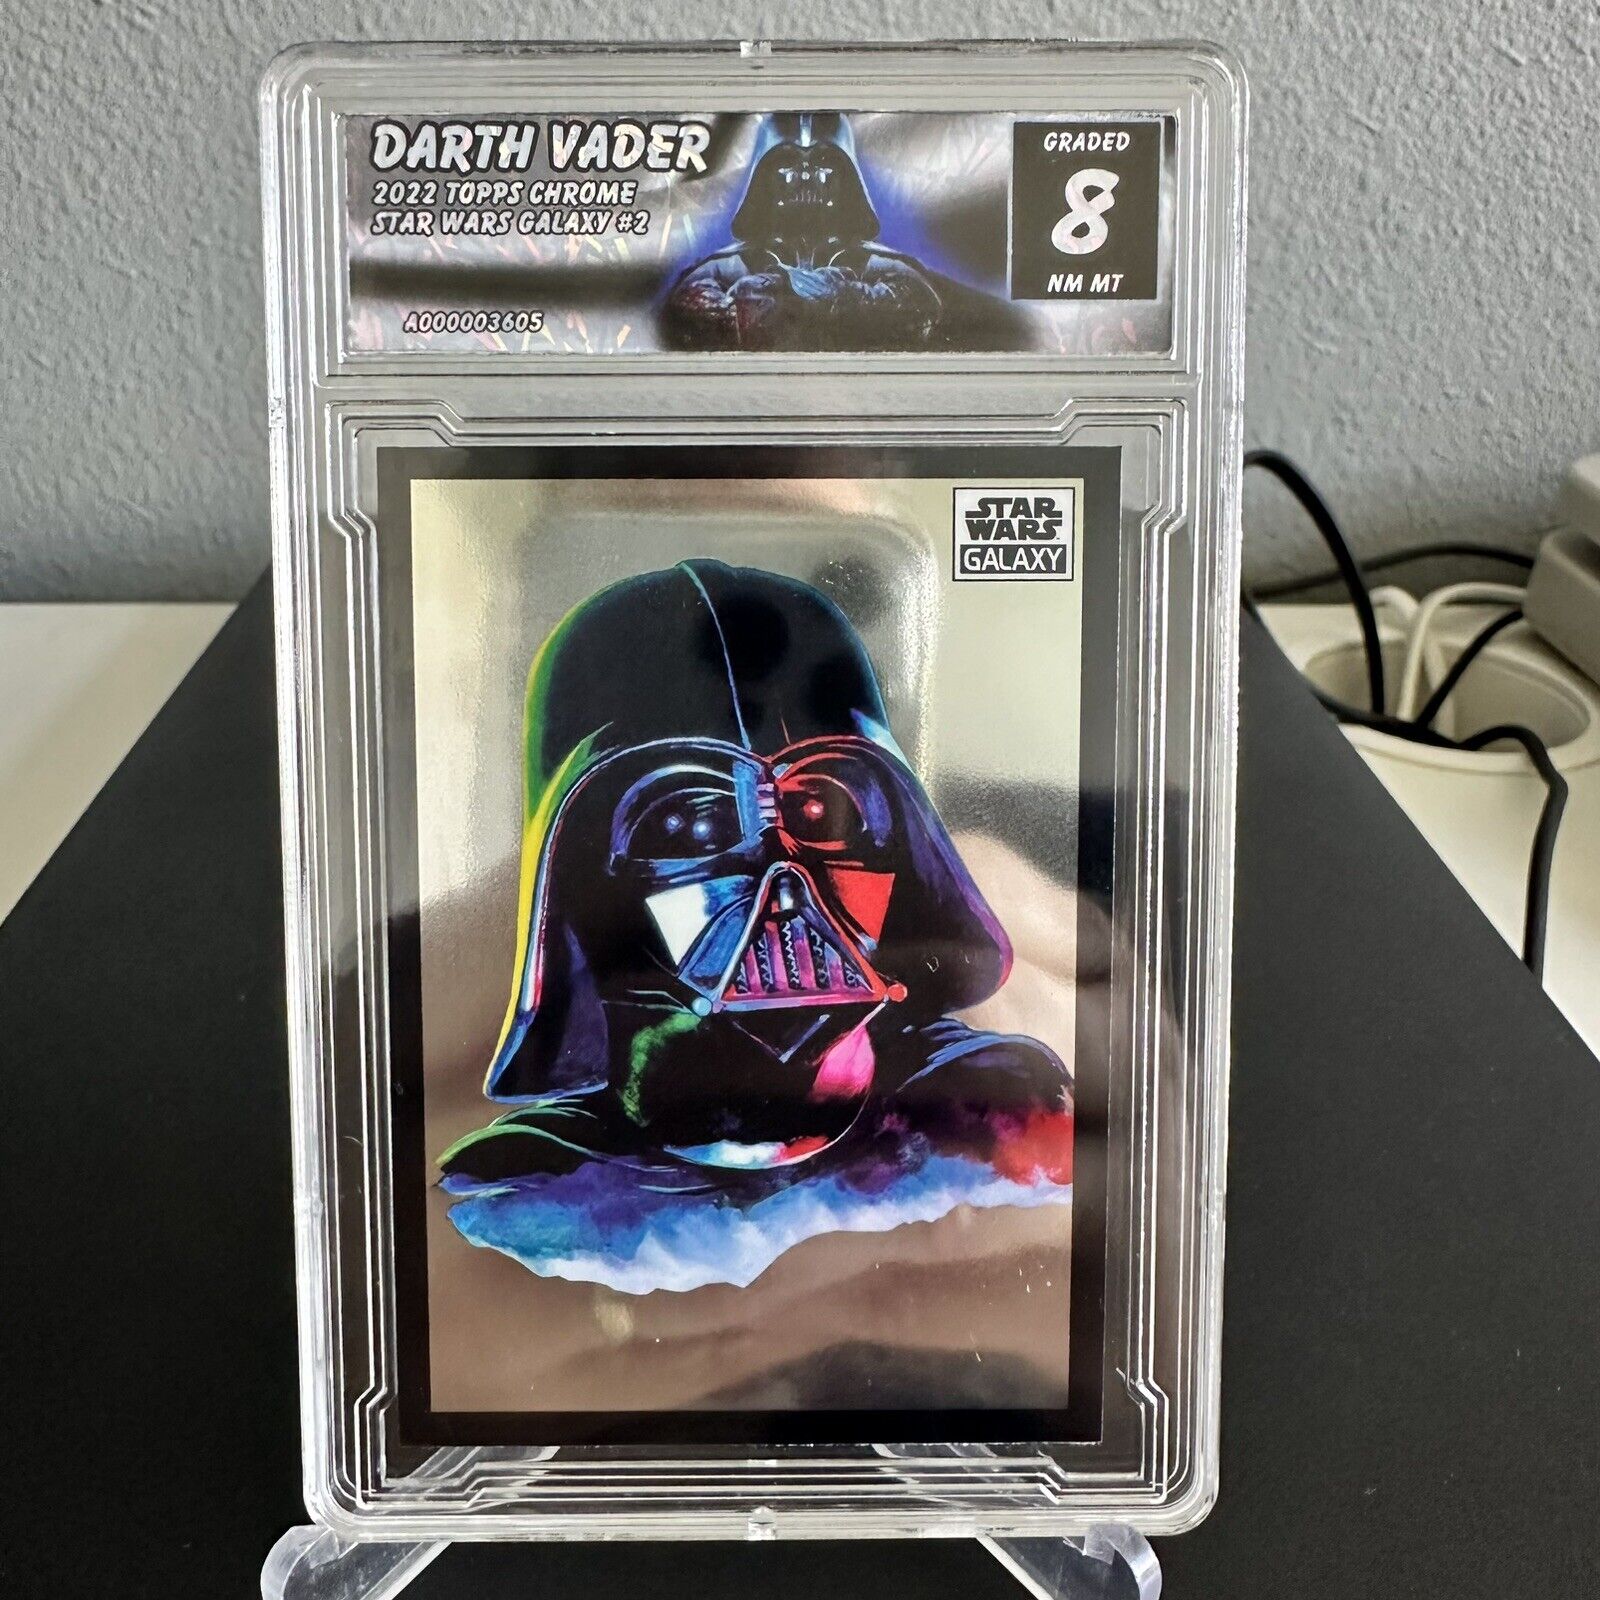 2022 Topps Chrome Star Wars Galaxy Darth Vader Card #2 Graded